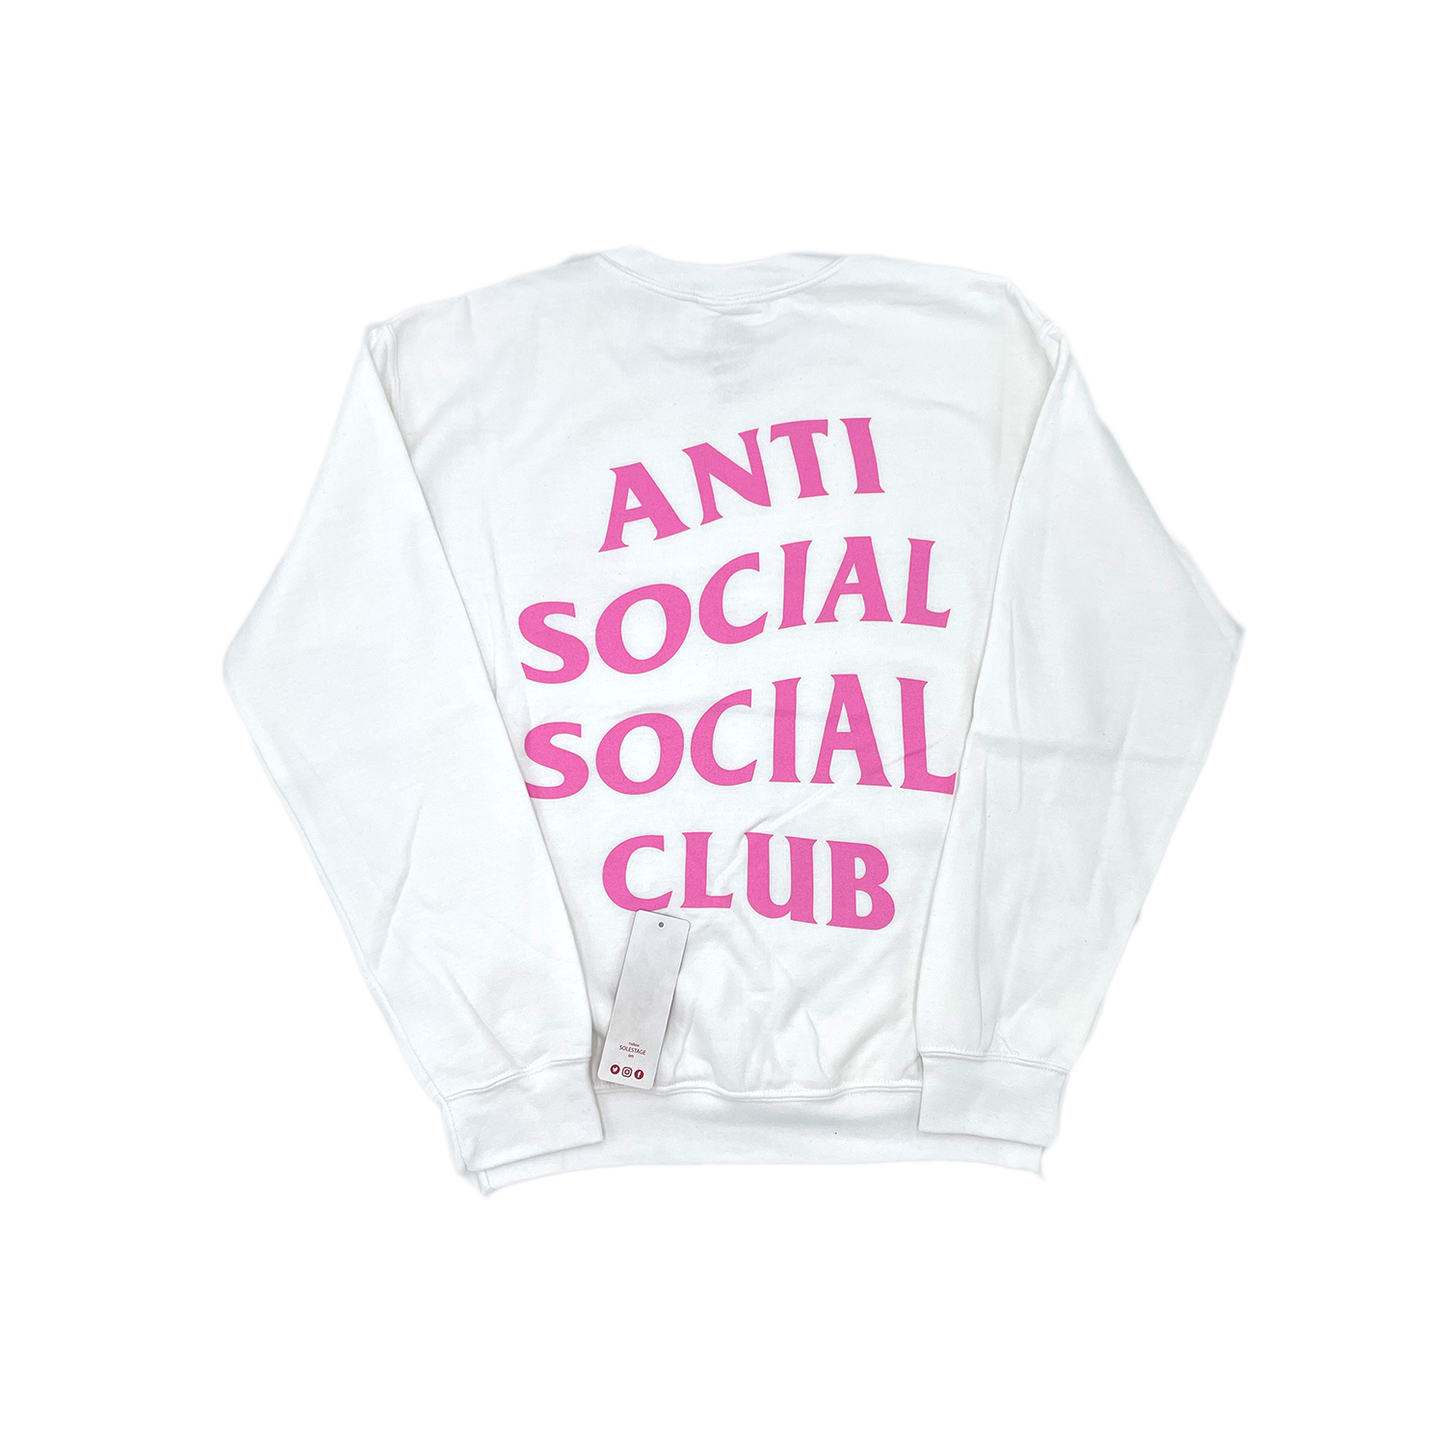 Antisocial social club Crewneck White Pink